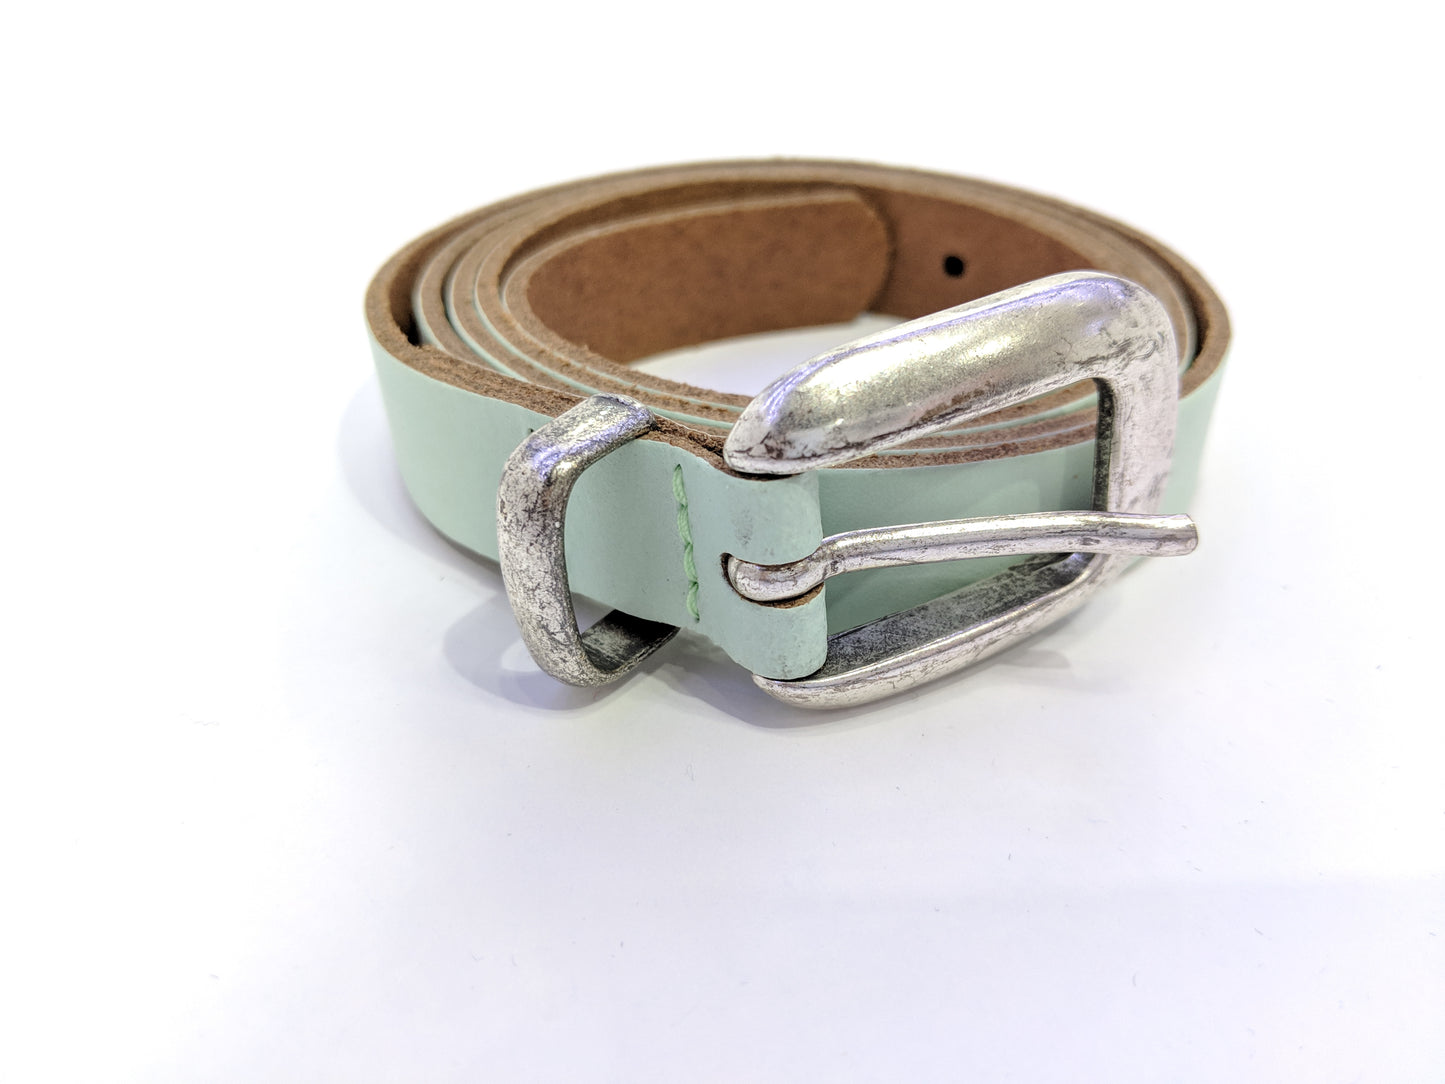 Mint colored leather belt